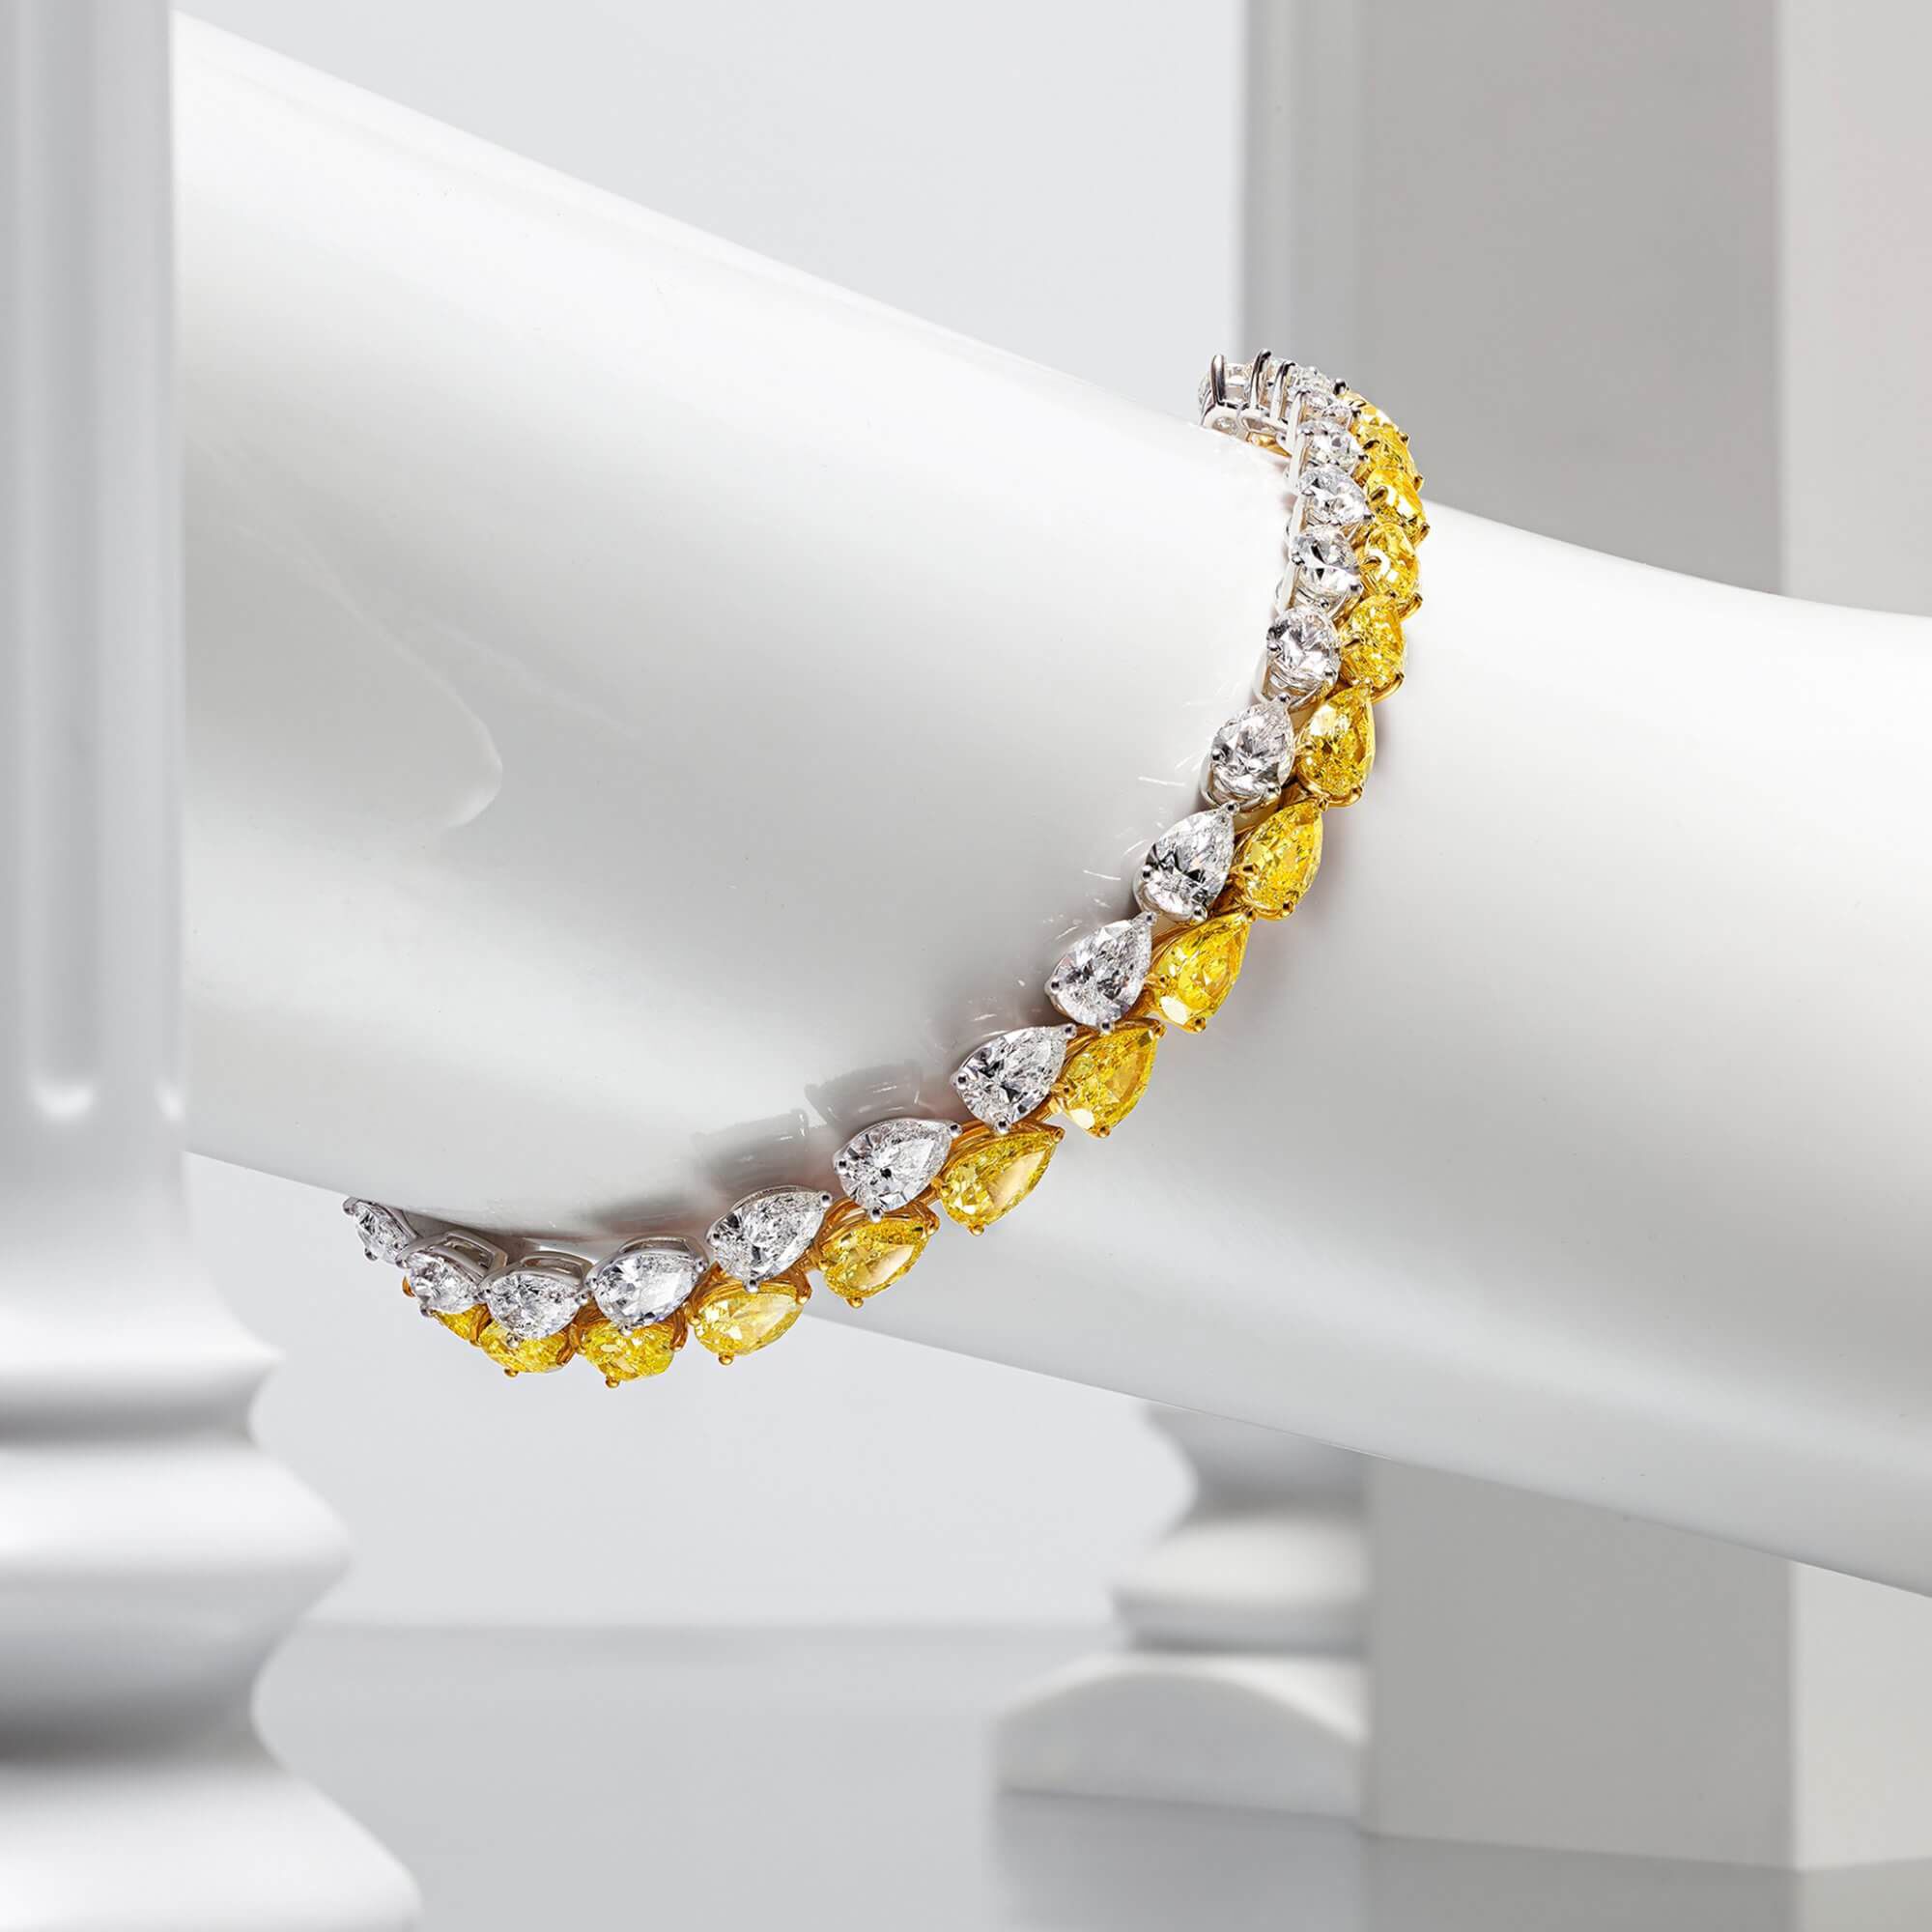 Graff Yellow And White Pearshape Diamond High Jewellery Earrings inside a Gallery.